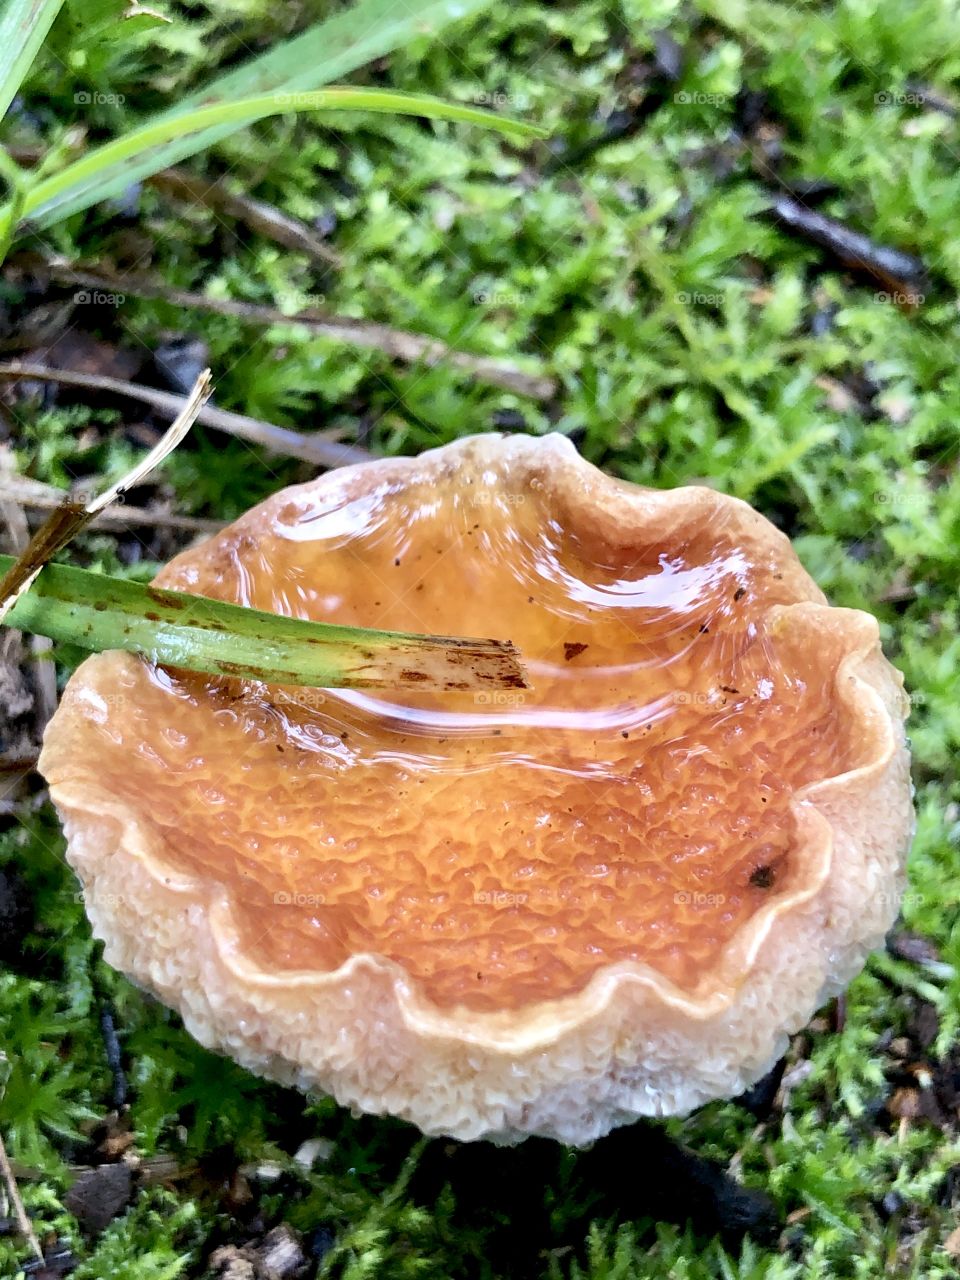 Rainwater collected in mushroom cap